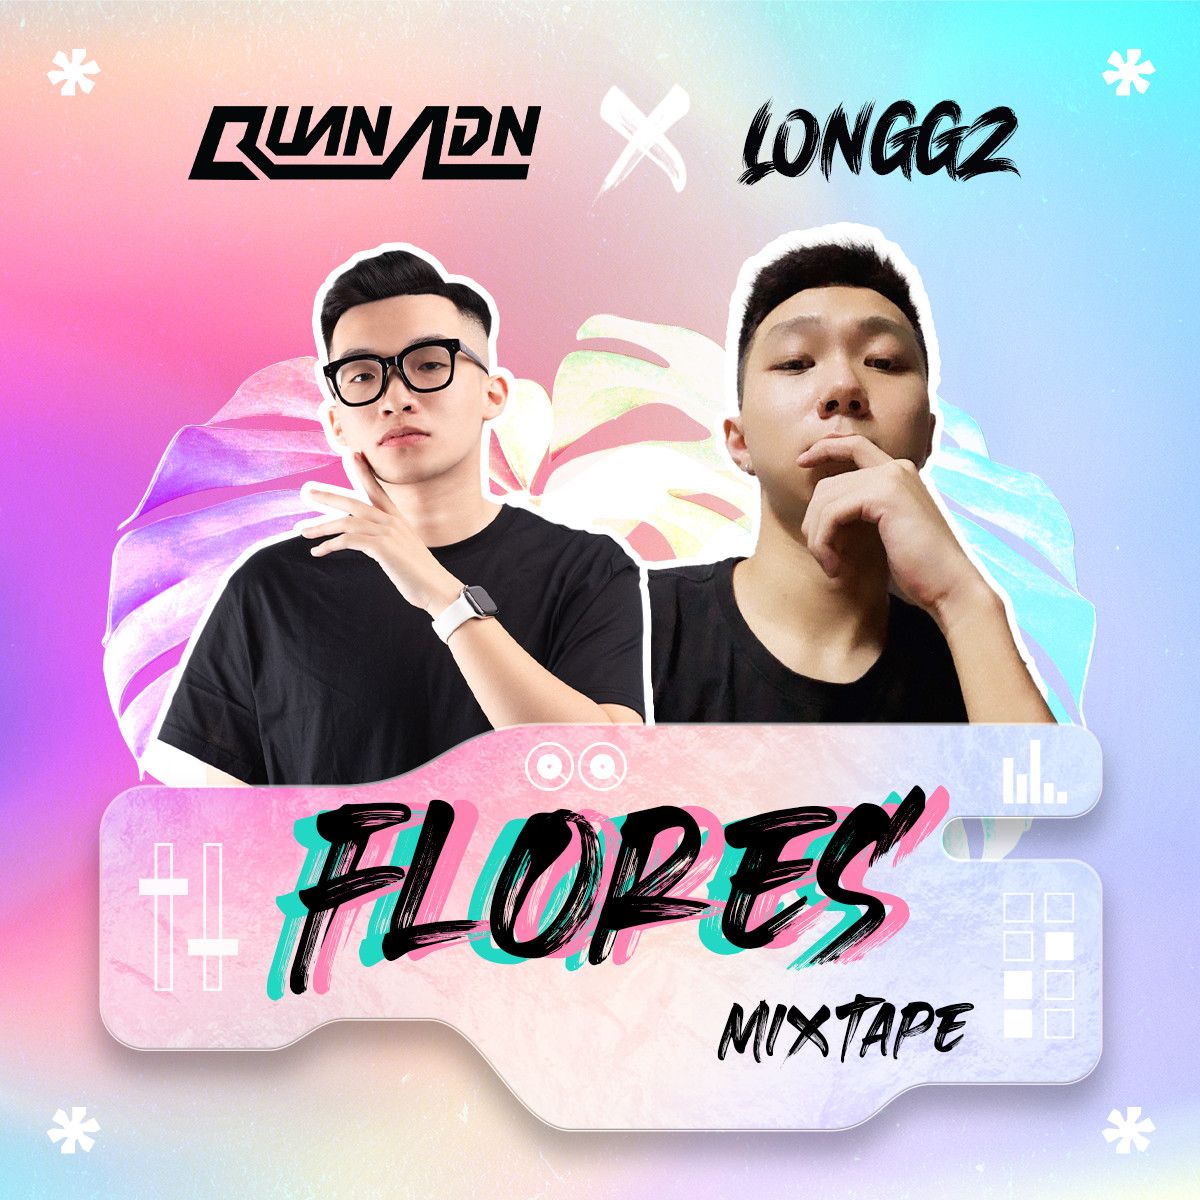 Skinuti Mixtape - Flores by Quan ADN & LONGGZ